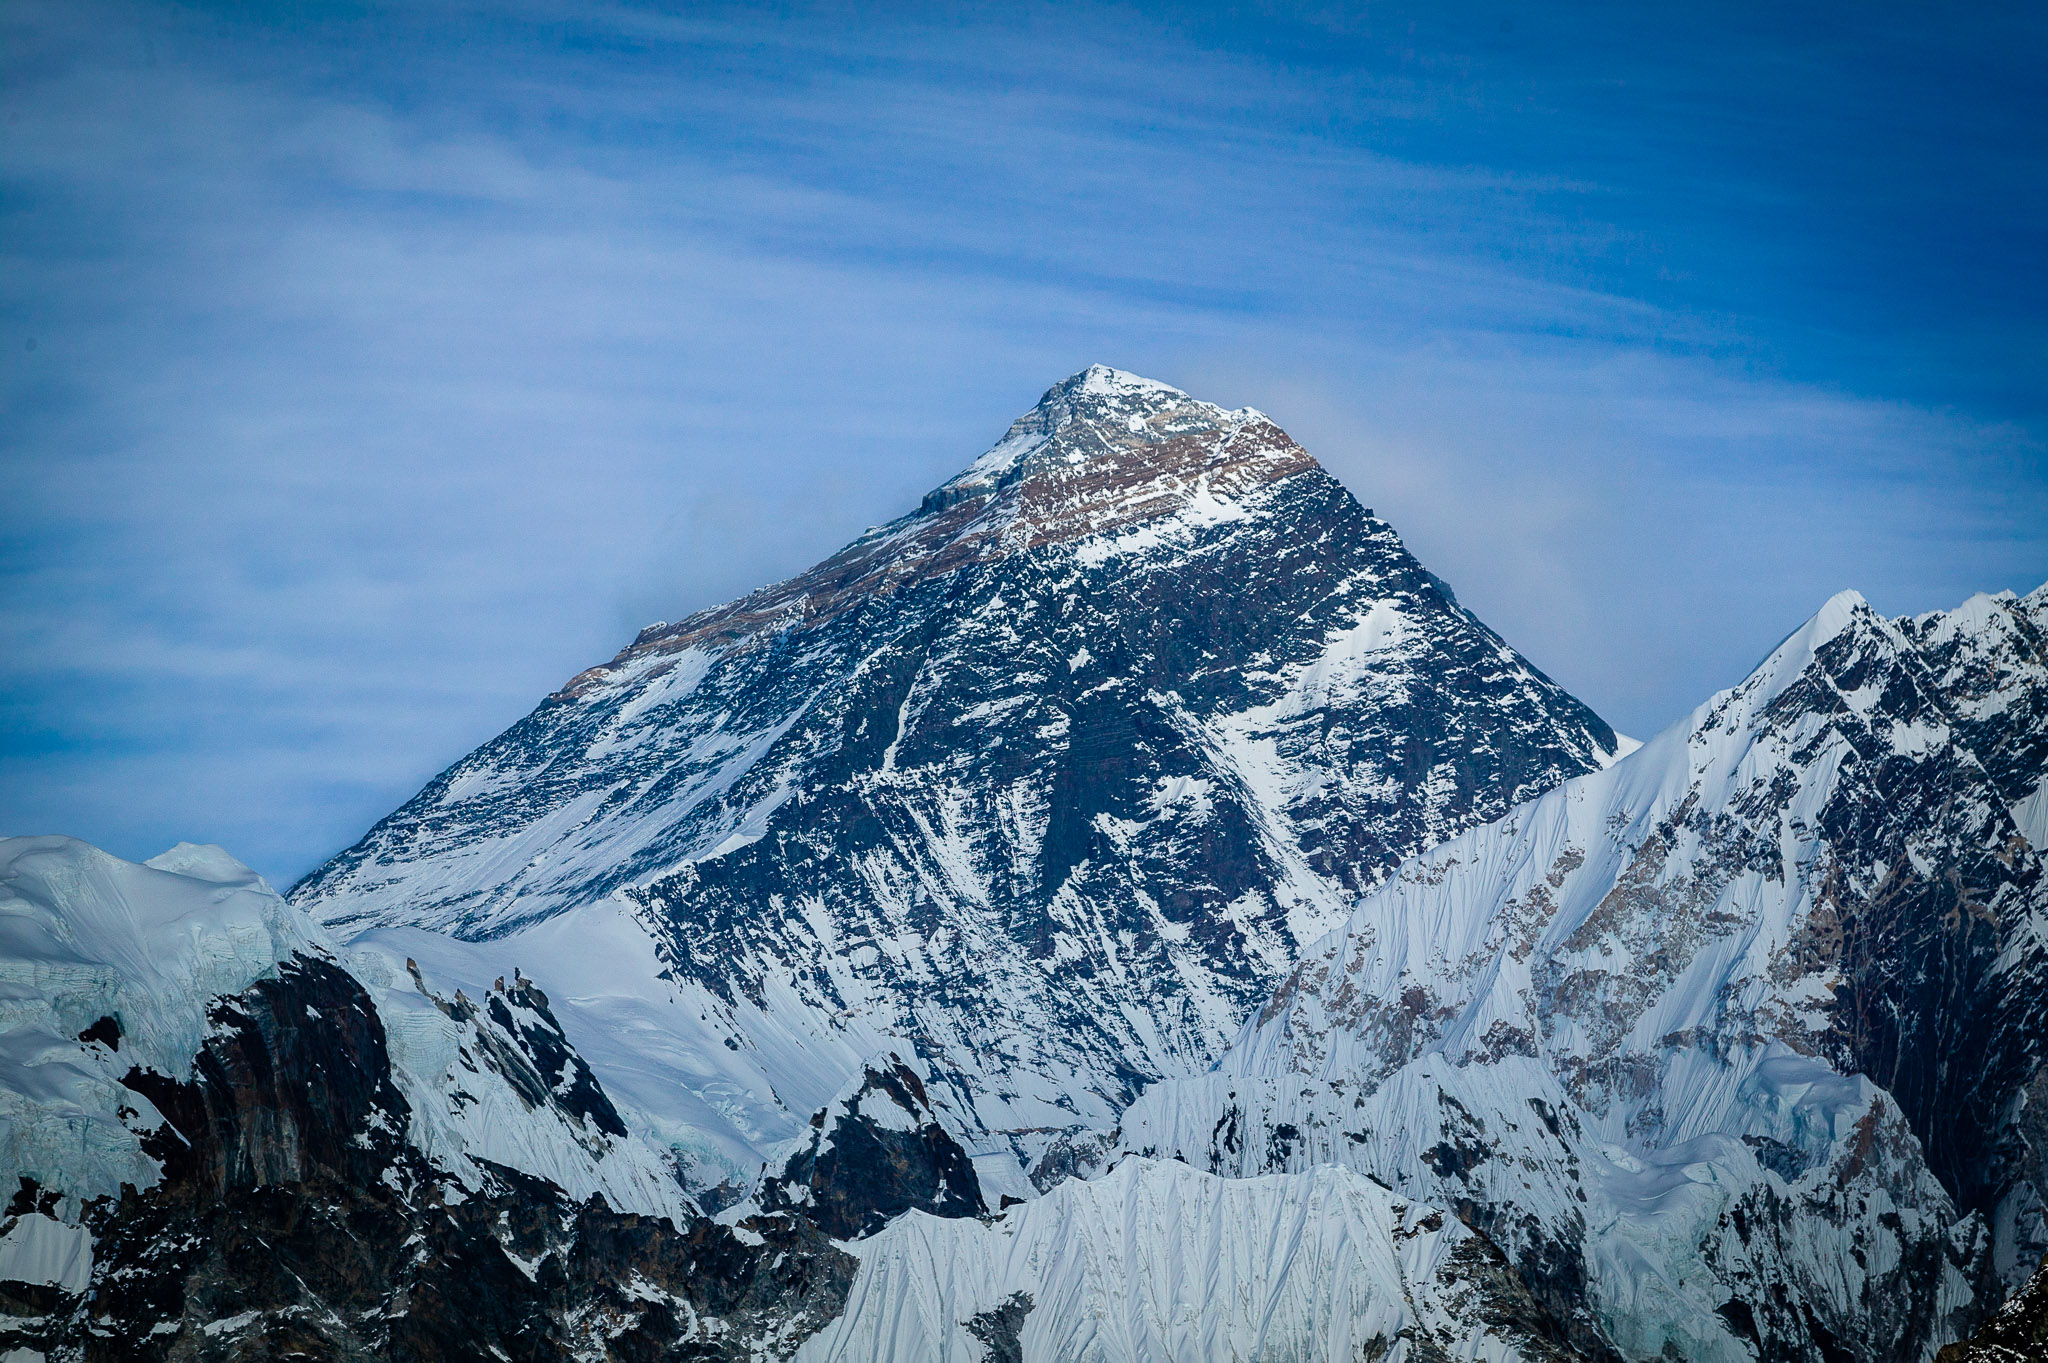 Everest as seen from Gokyo Ri